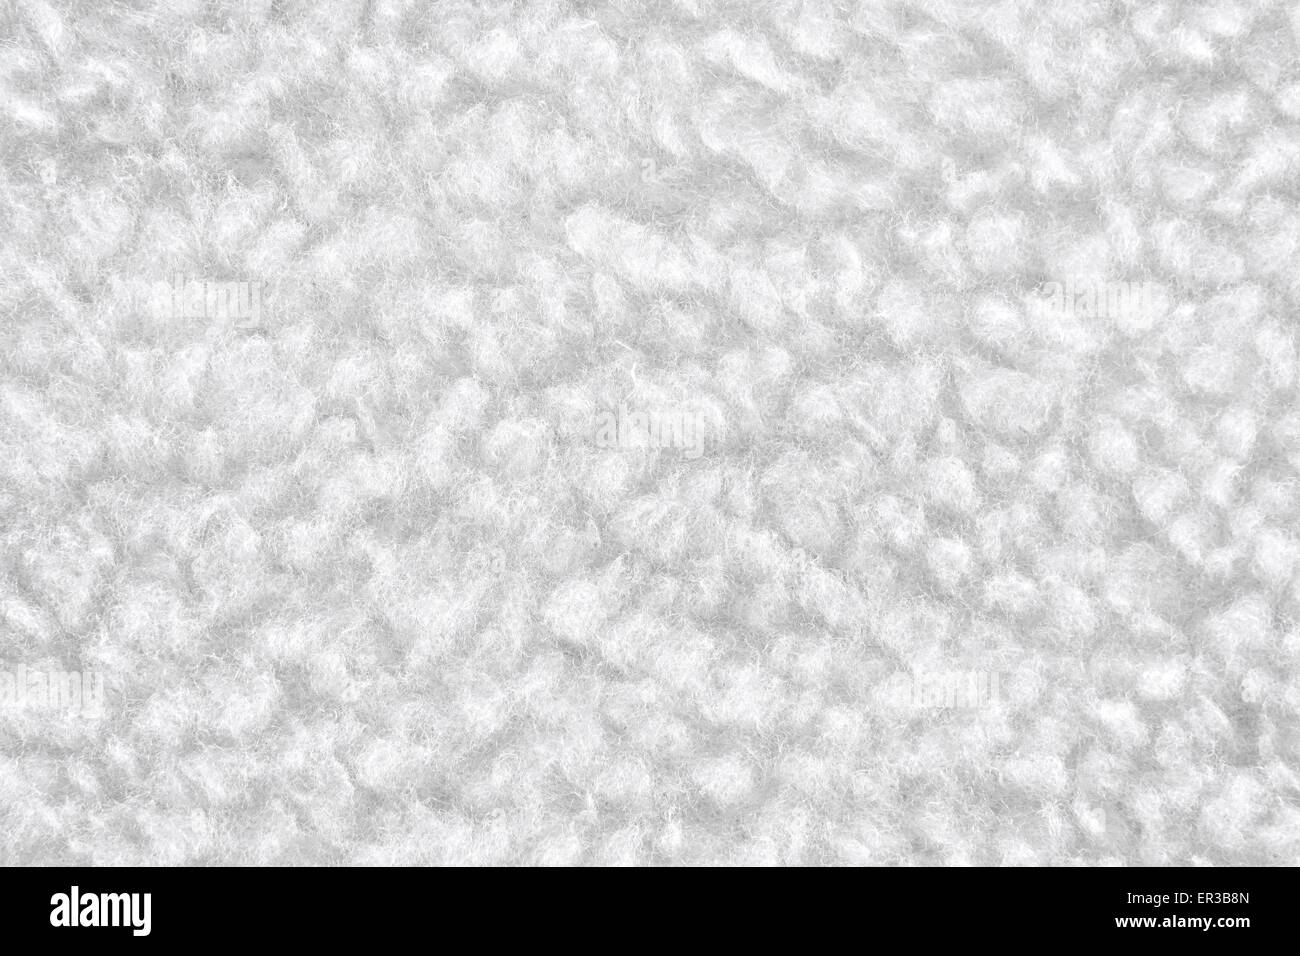 https://c8.alamy.com/comp/ER3B8N/backround-of-white-cotton-texture-ER3B8N.jpg